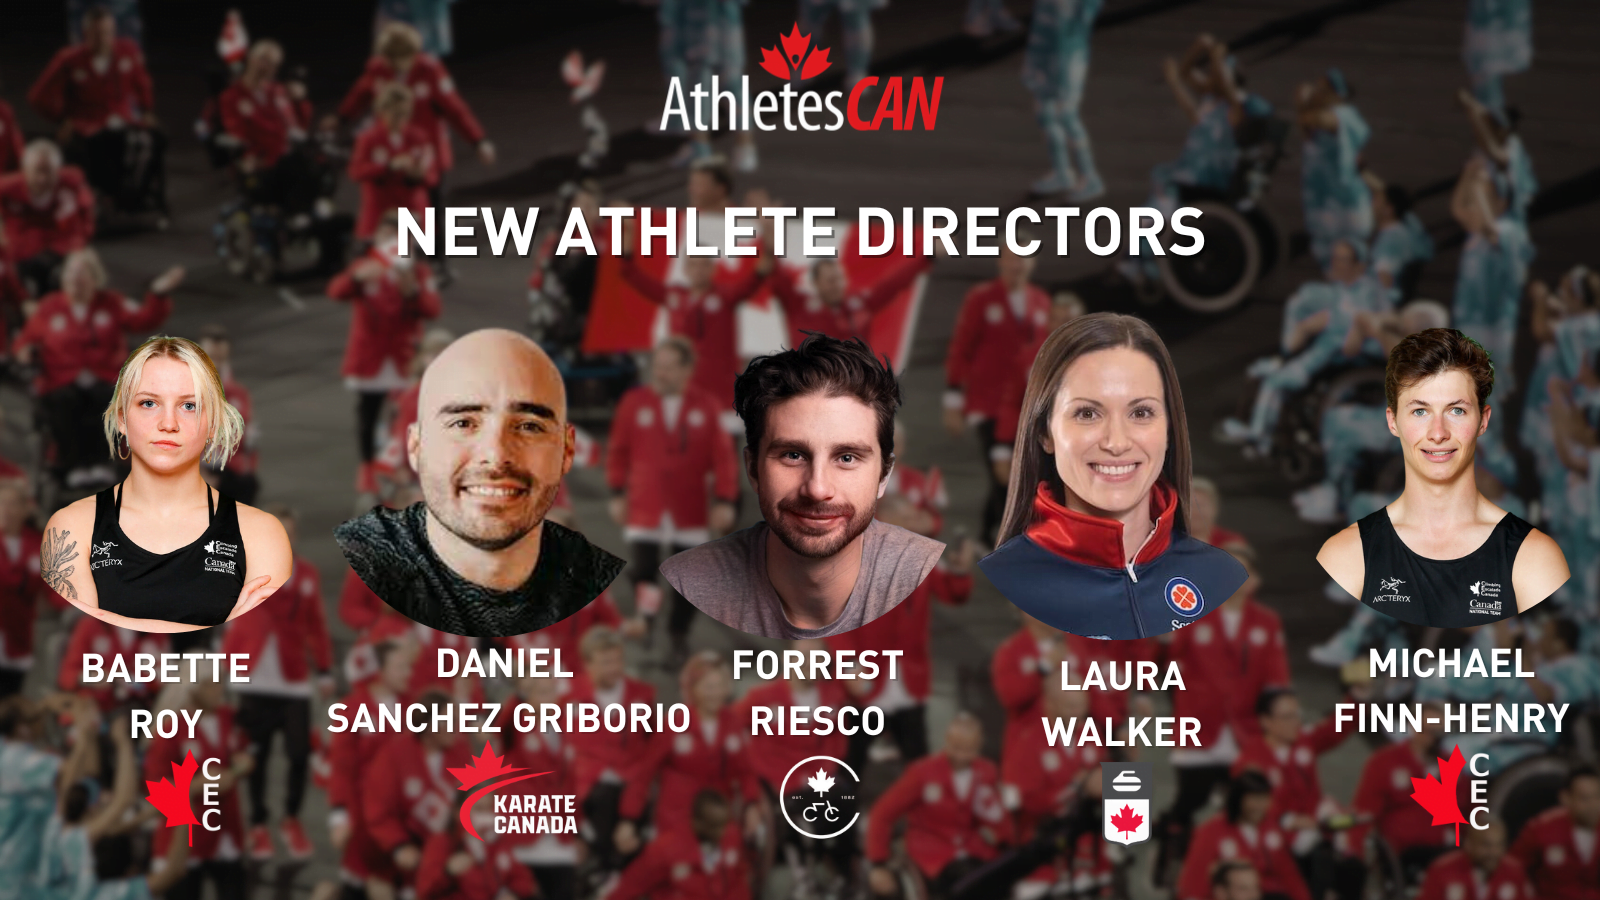 New Athlete Directors: Babette Roy and Michael Finn-Henry (Climbing), Daniel Sanchez Griborio (Karate), Forrest Riesco (Cycling), Laura Walker (Curling)